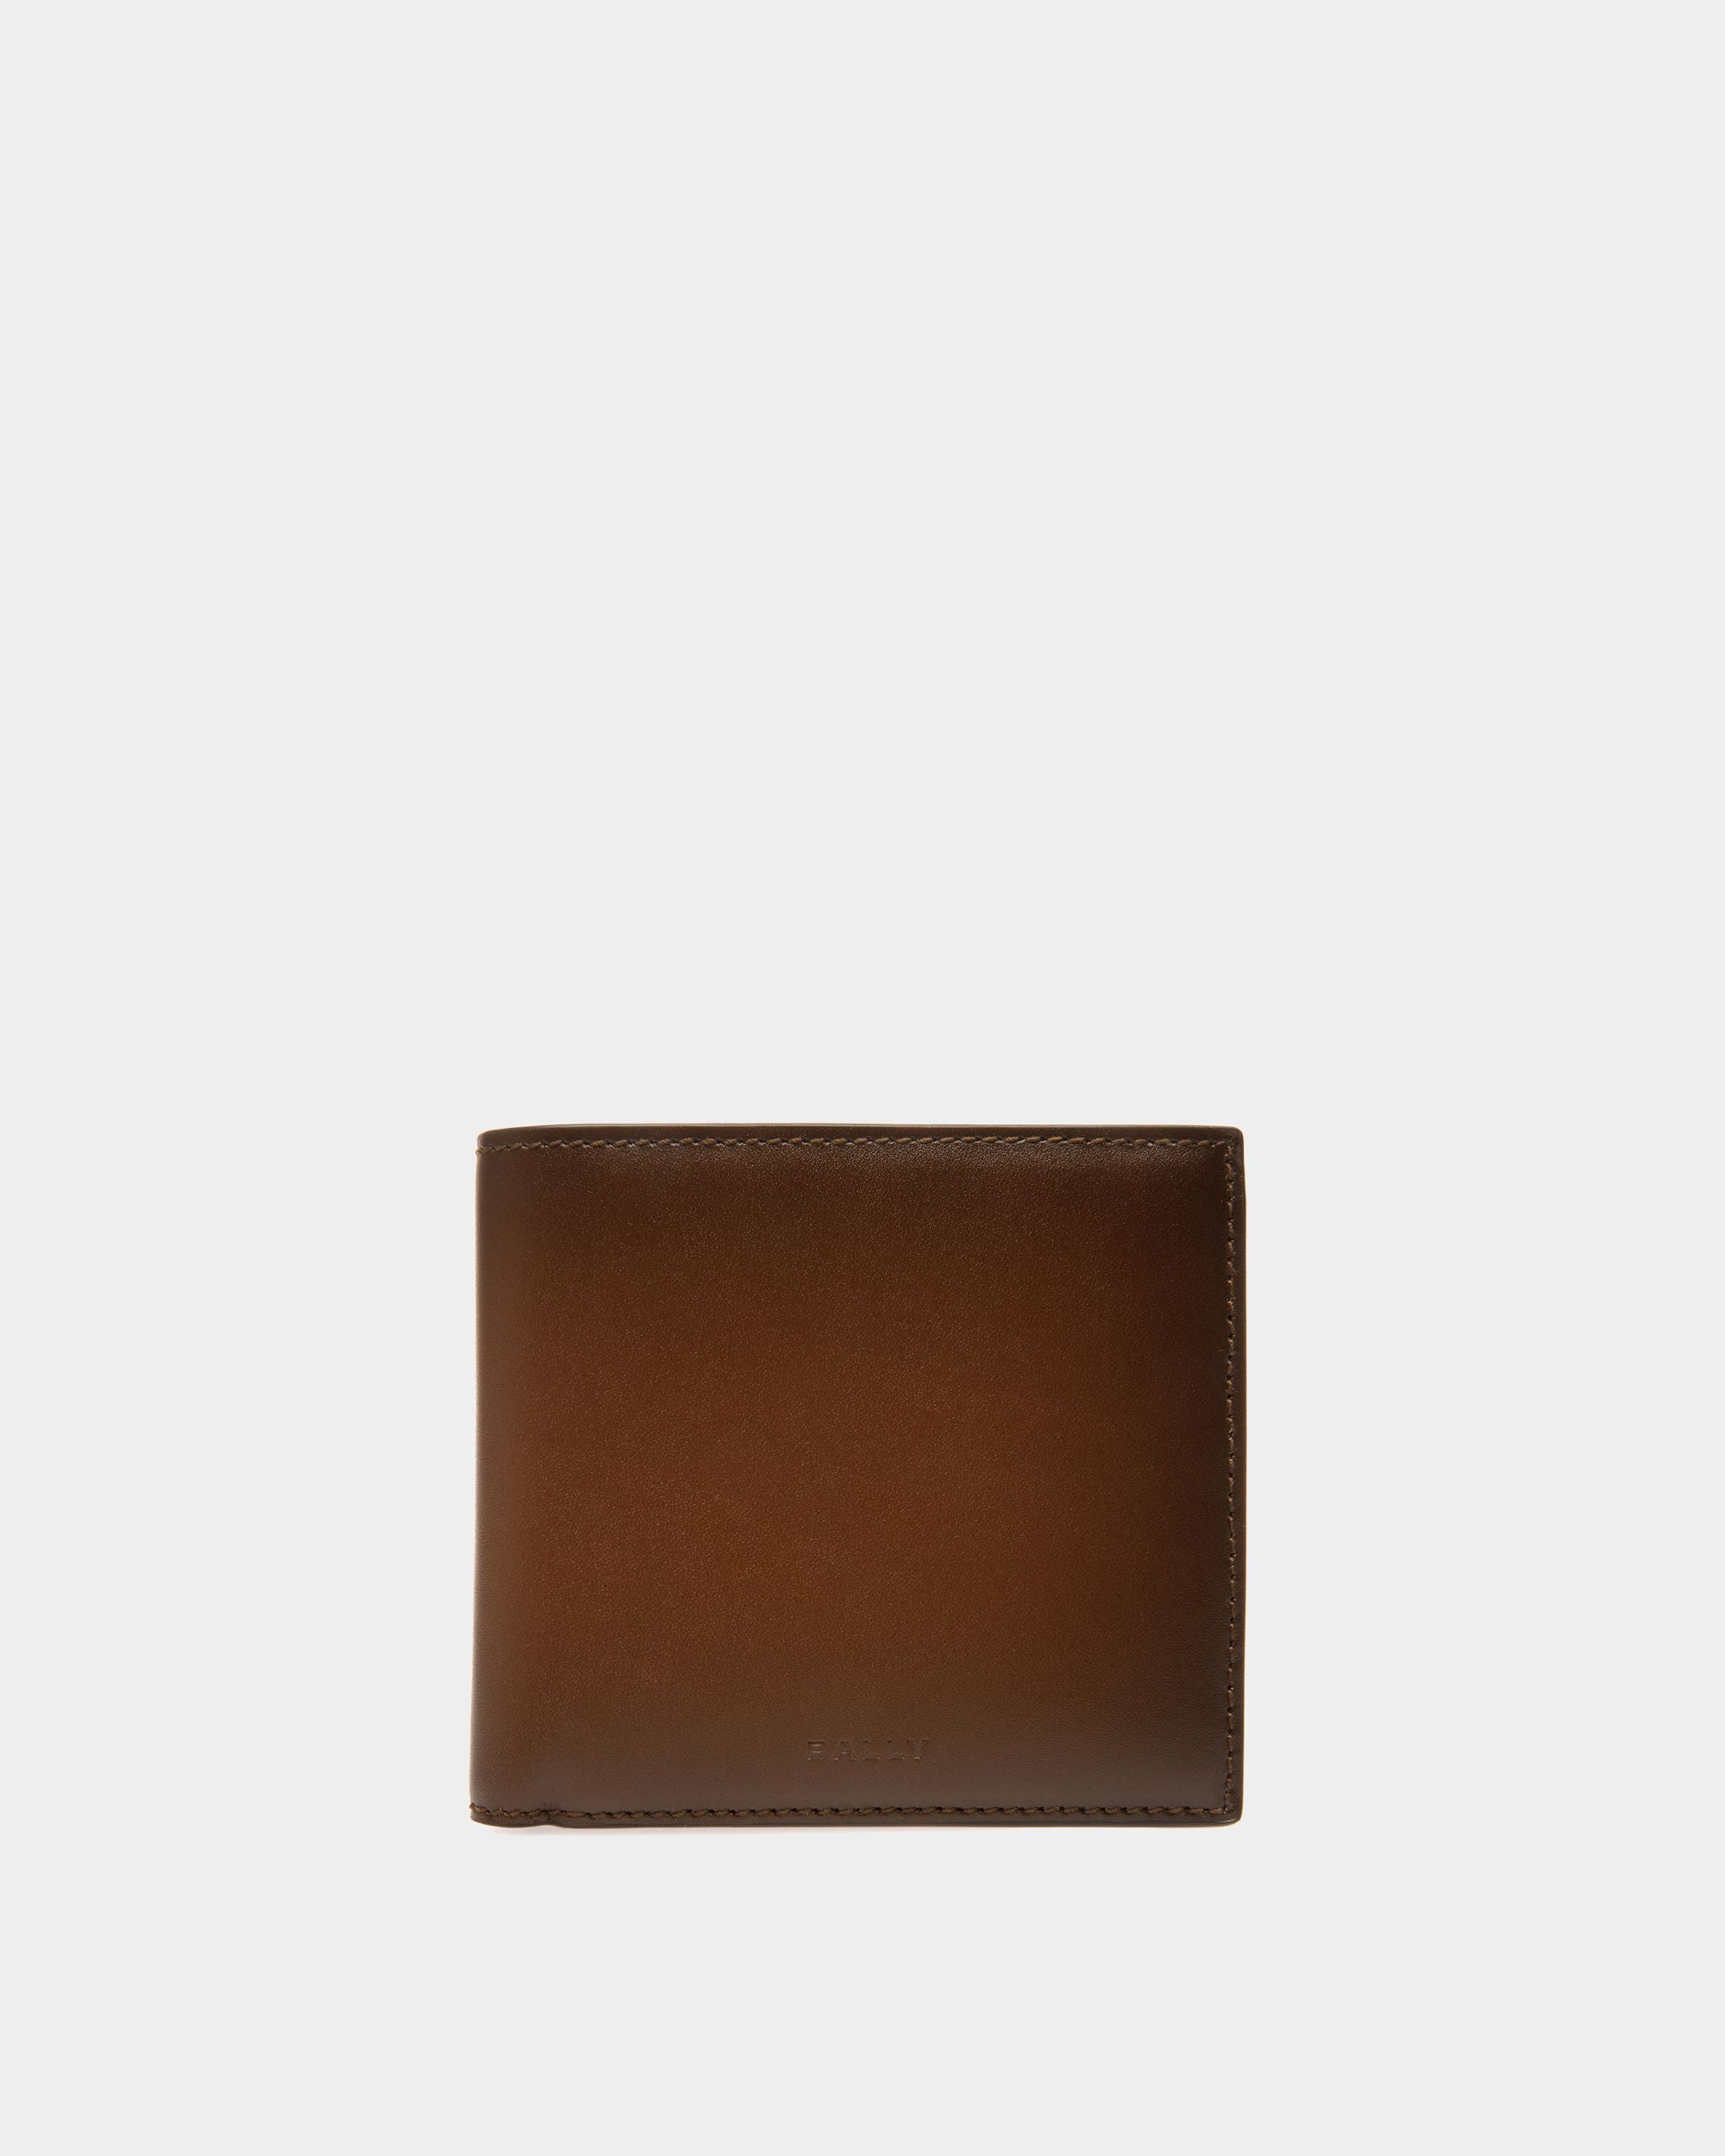 Speciale Bi-Fold Wallet | Men's Wallet | Brown Leather | Bally | Still Life Front